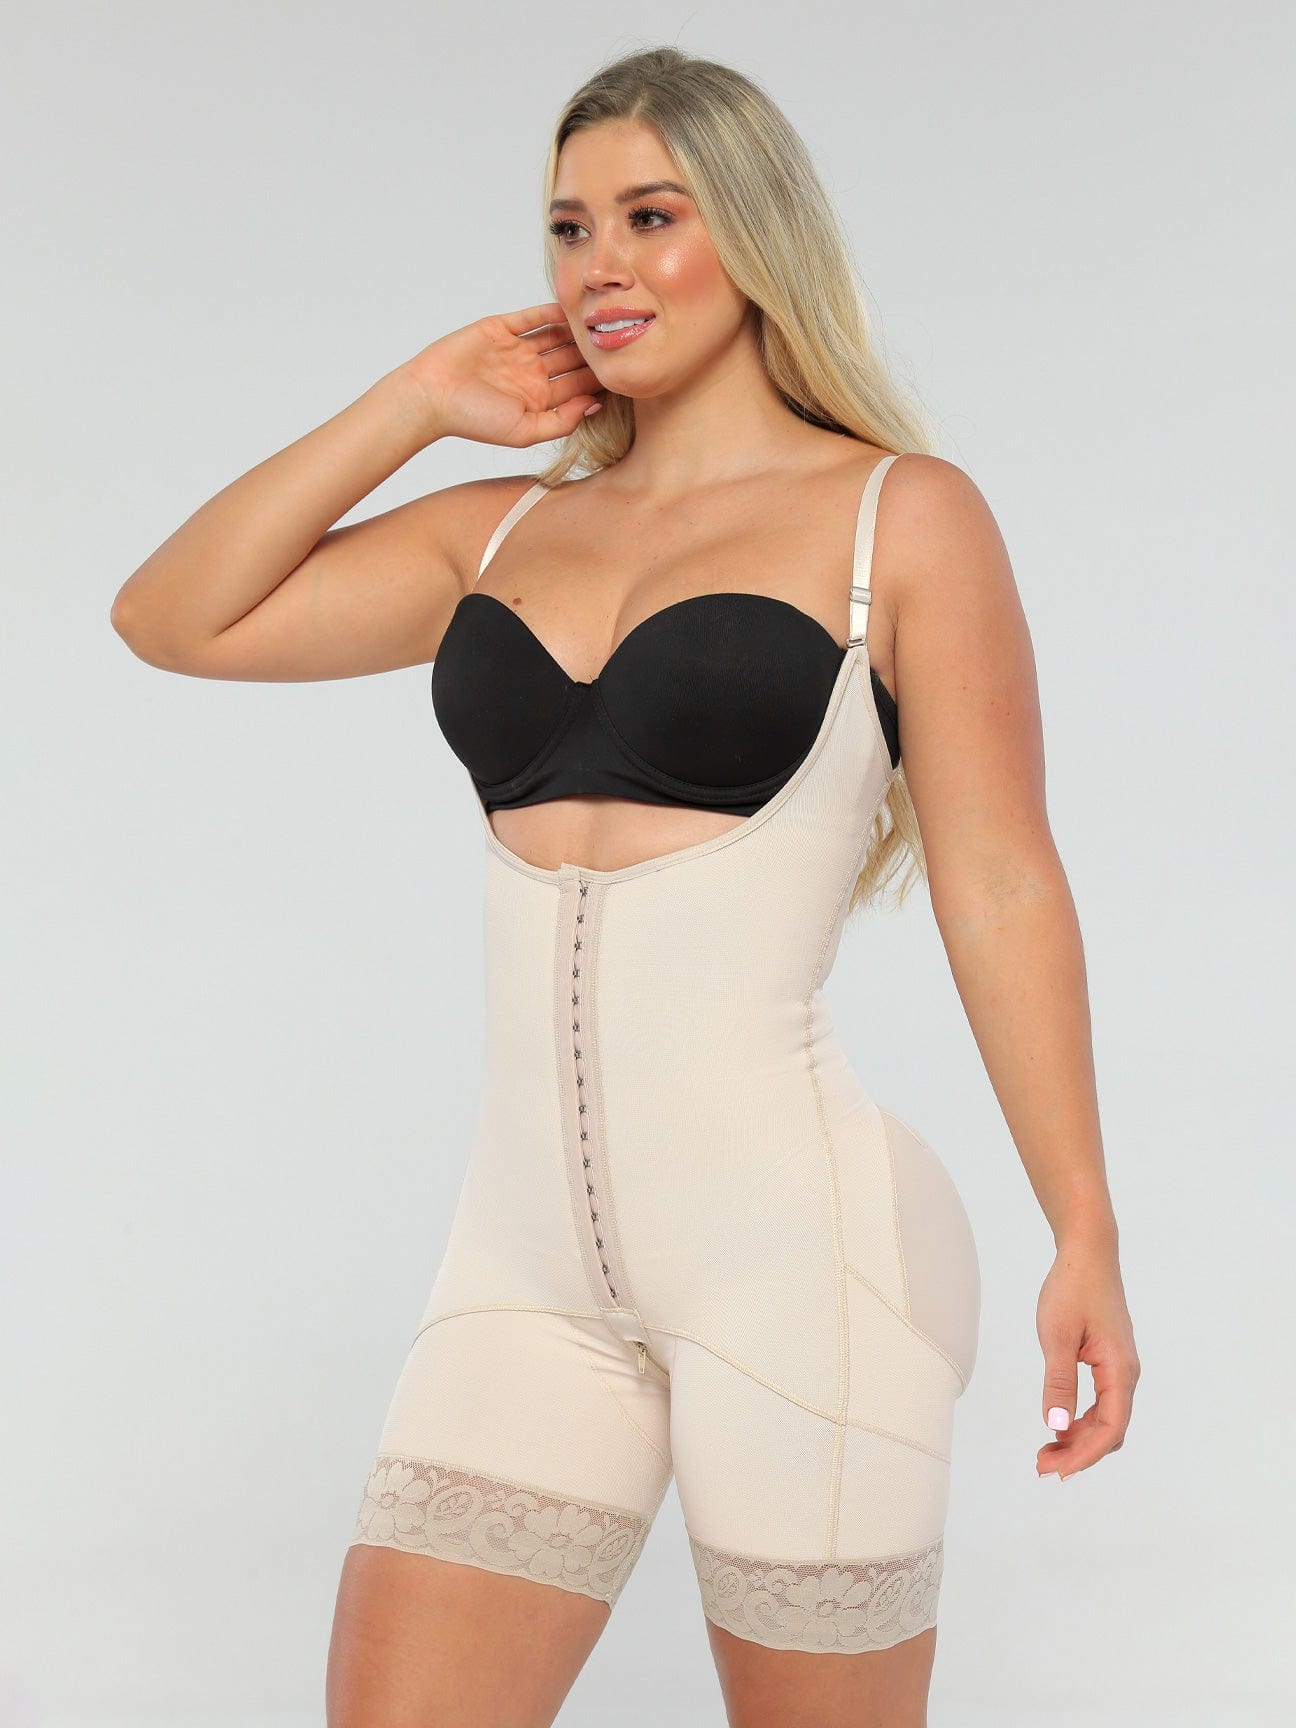  054BF Full Body Shaper Women Liposuction Compression Garment  Faja Colombianas Moldeadora Para Mujer Mocha XX-Large